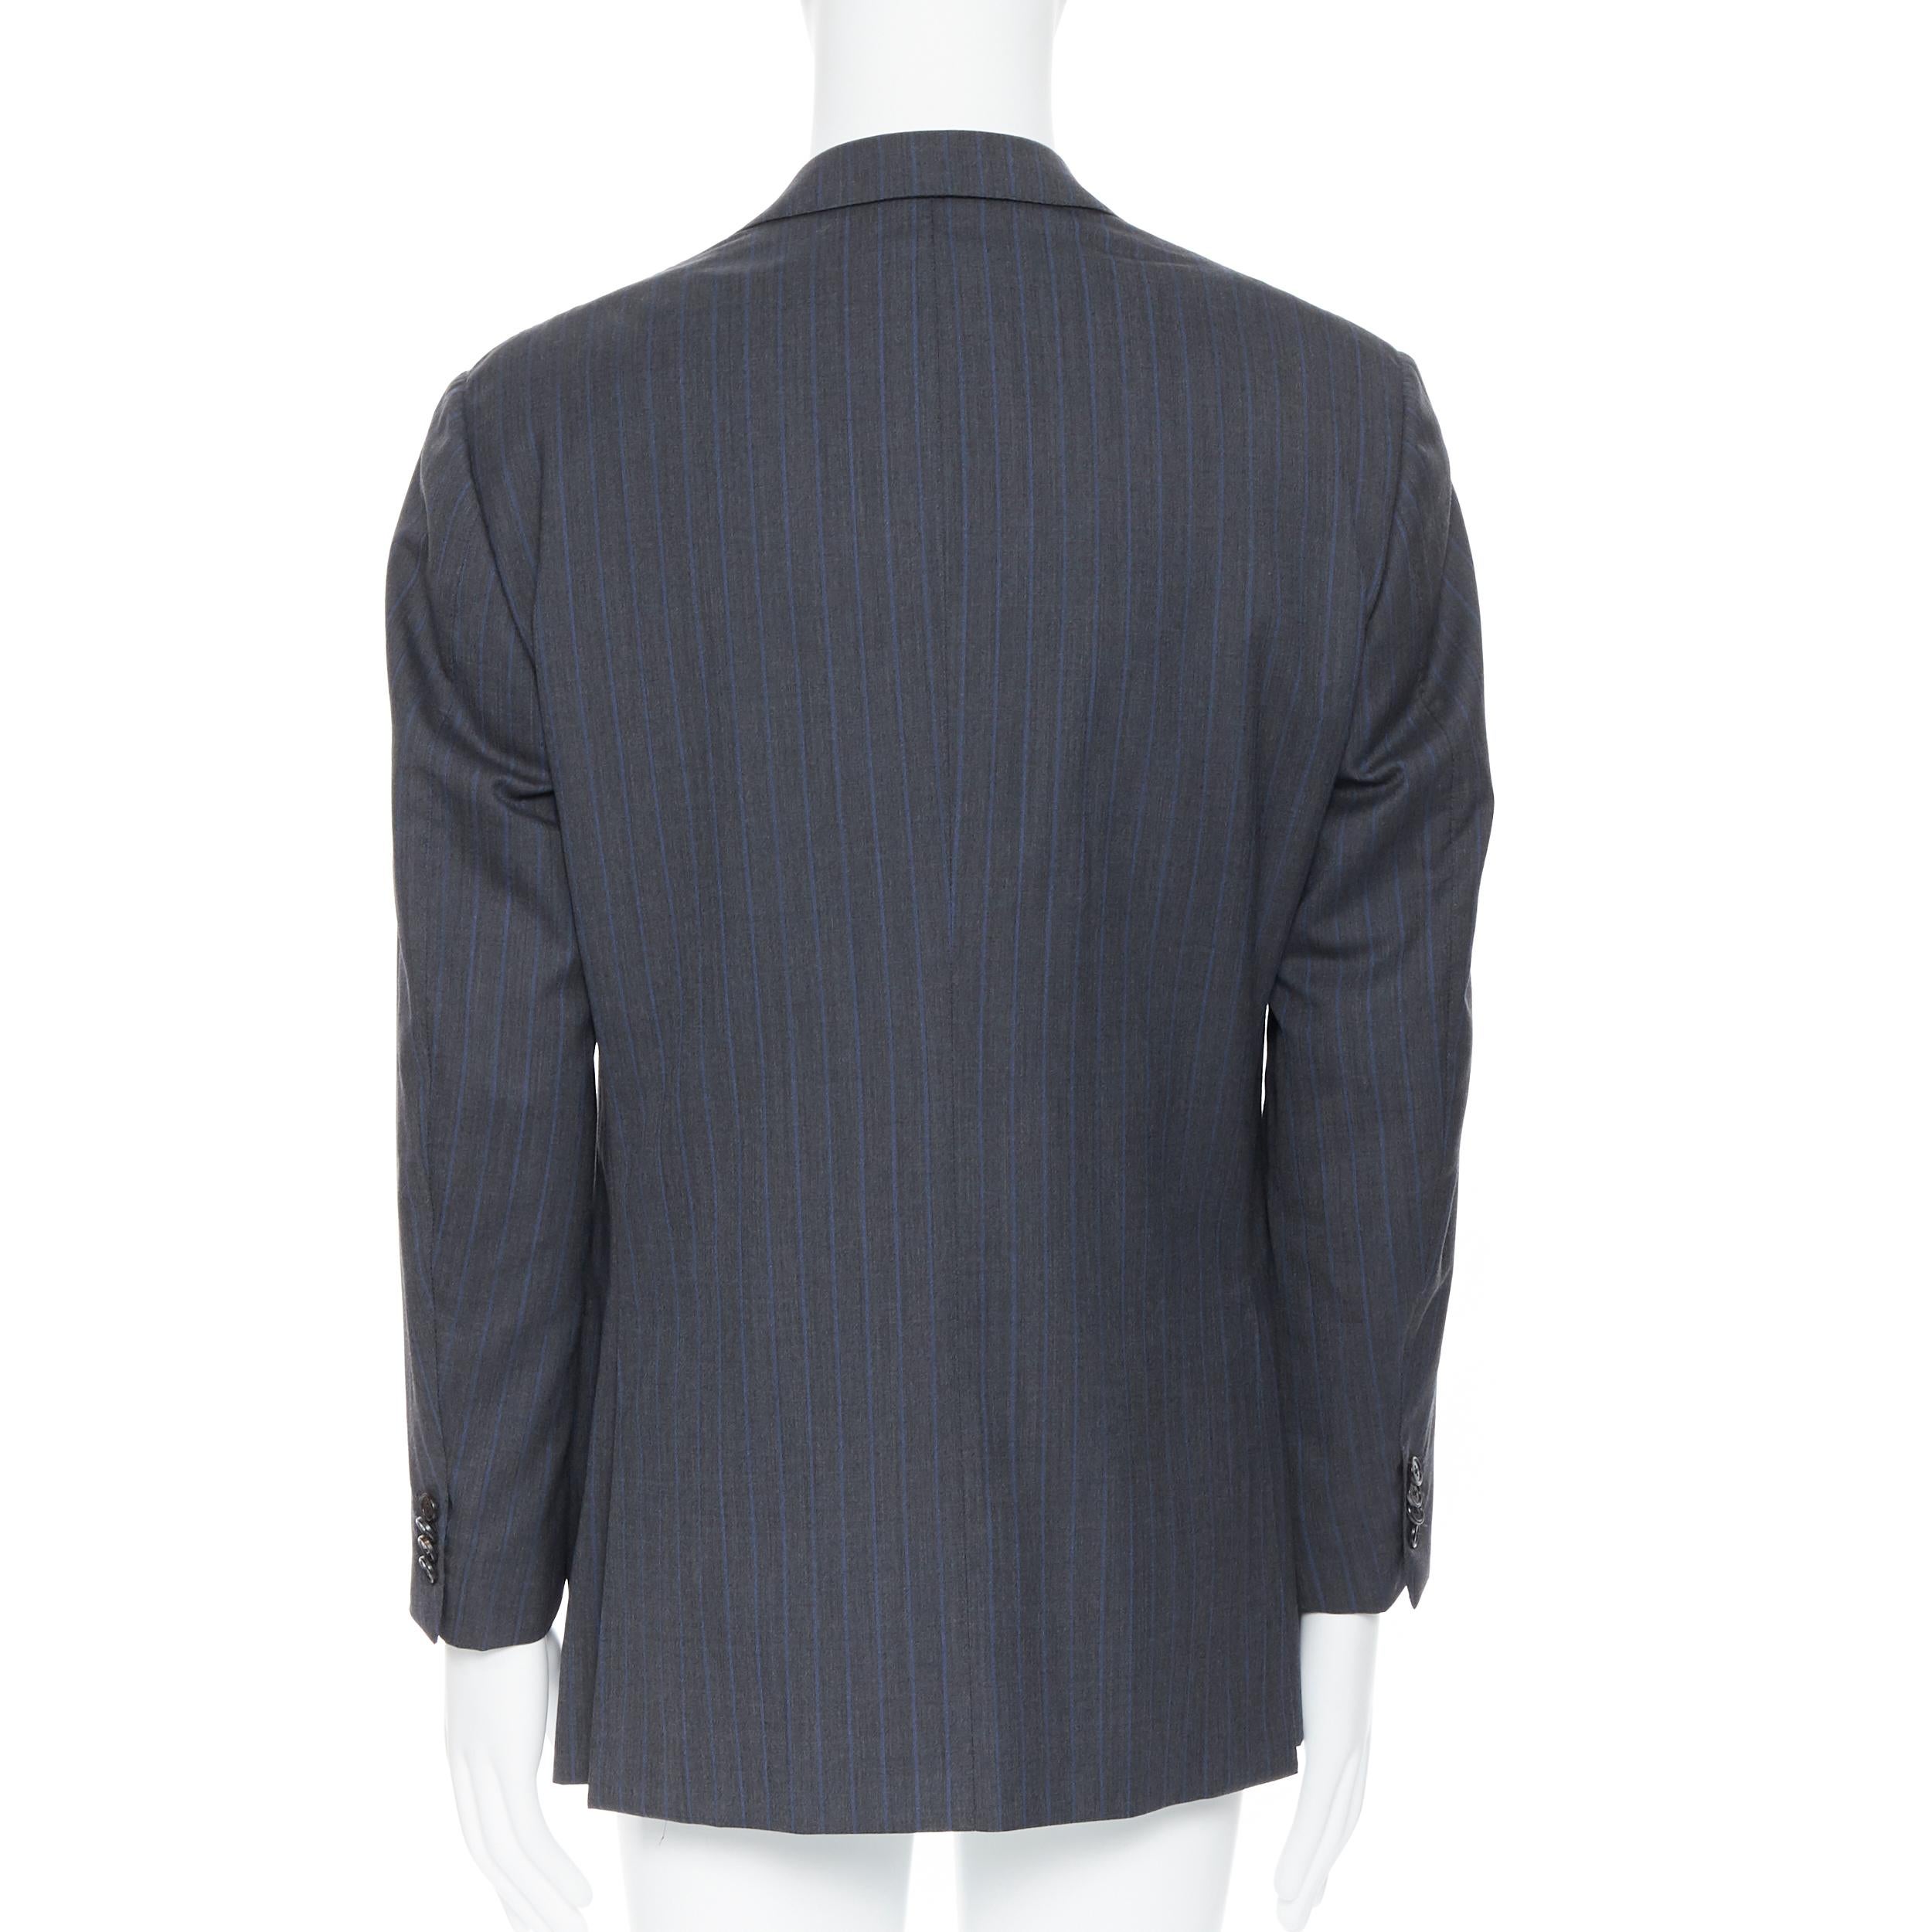 ERMENEGILDO ZEGNA Cool Effect grey blue pinstripe wool classic blazer jacket 50R 1